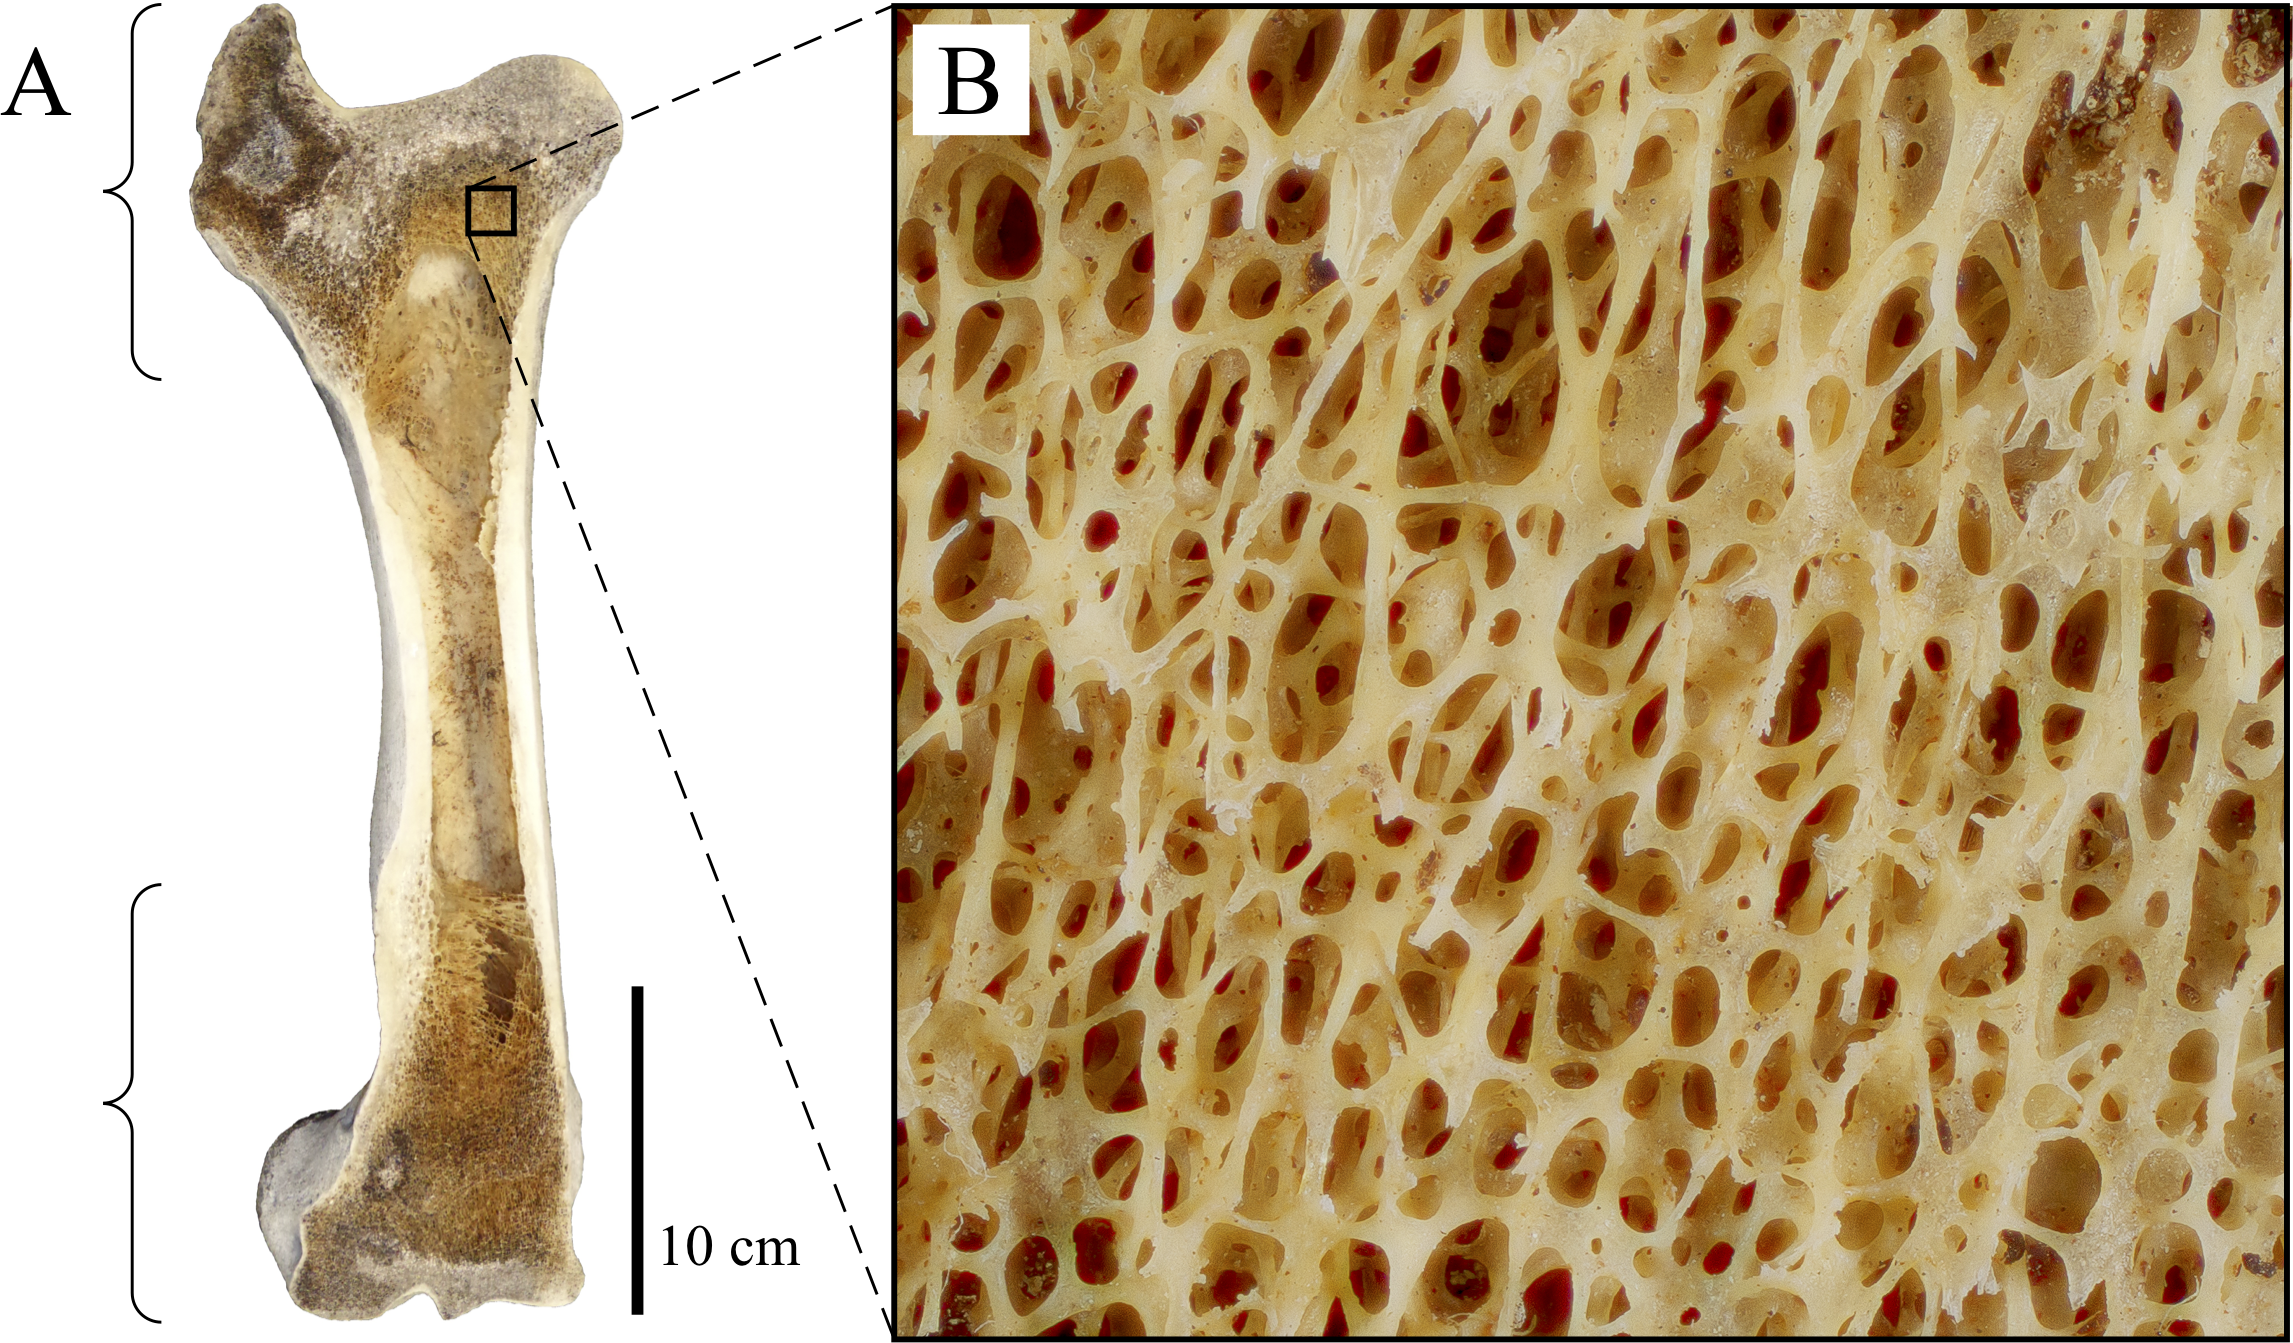 Cancellous bone and theropod dinosaur locomotion. Part I—an examination